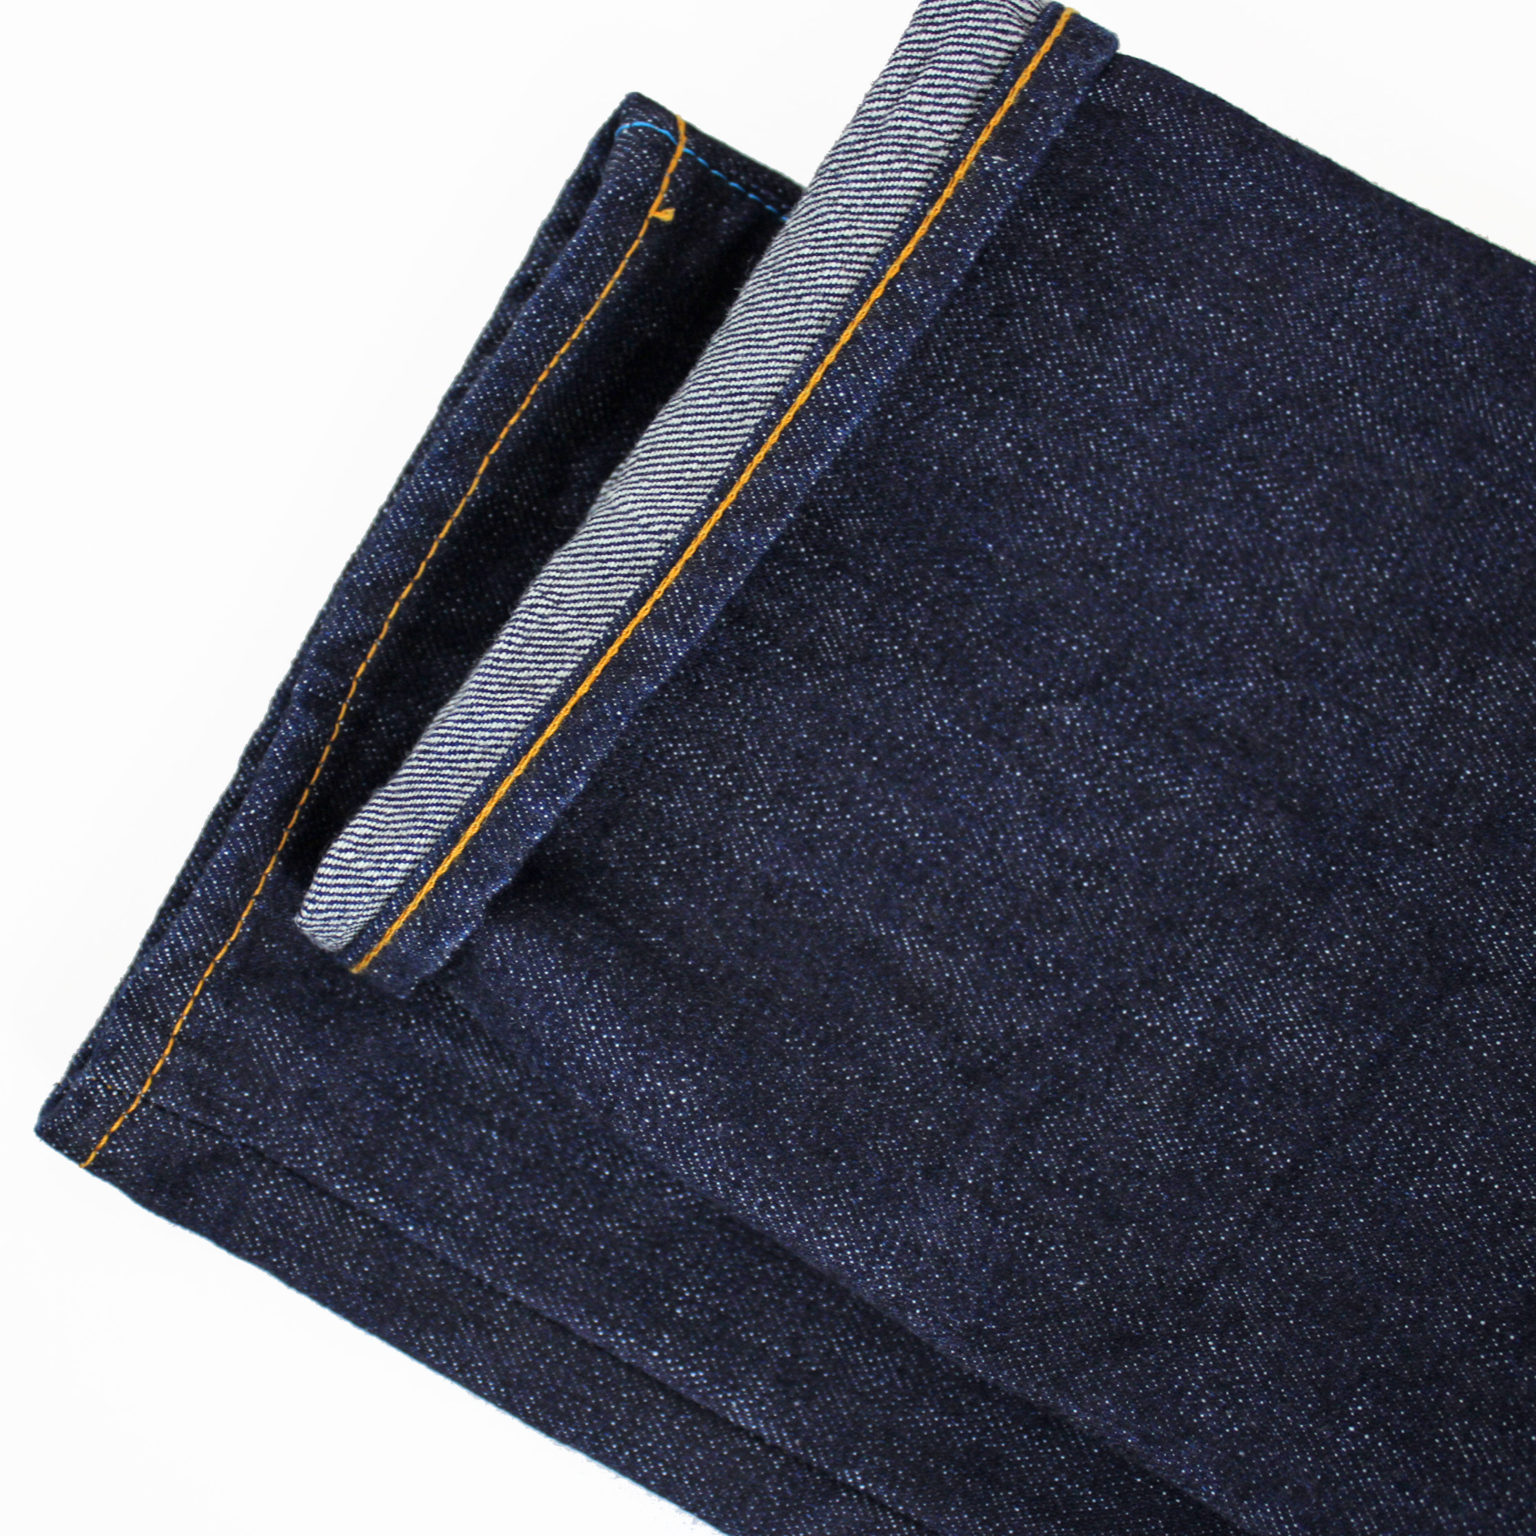 Japan Blue Jeans - 14.8oz Japanese Selvedge - Jump The Gun